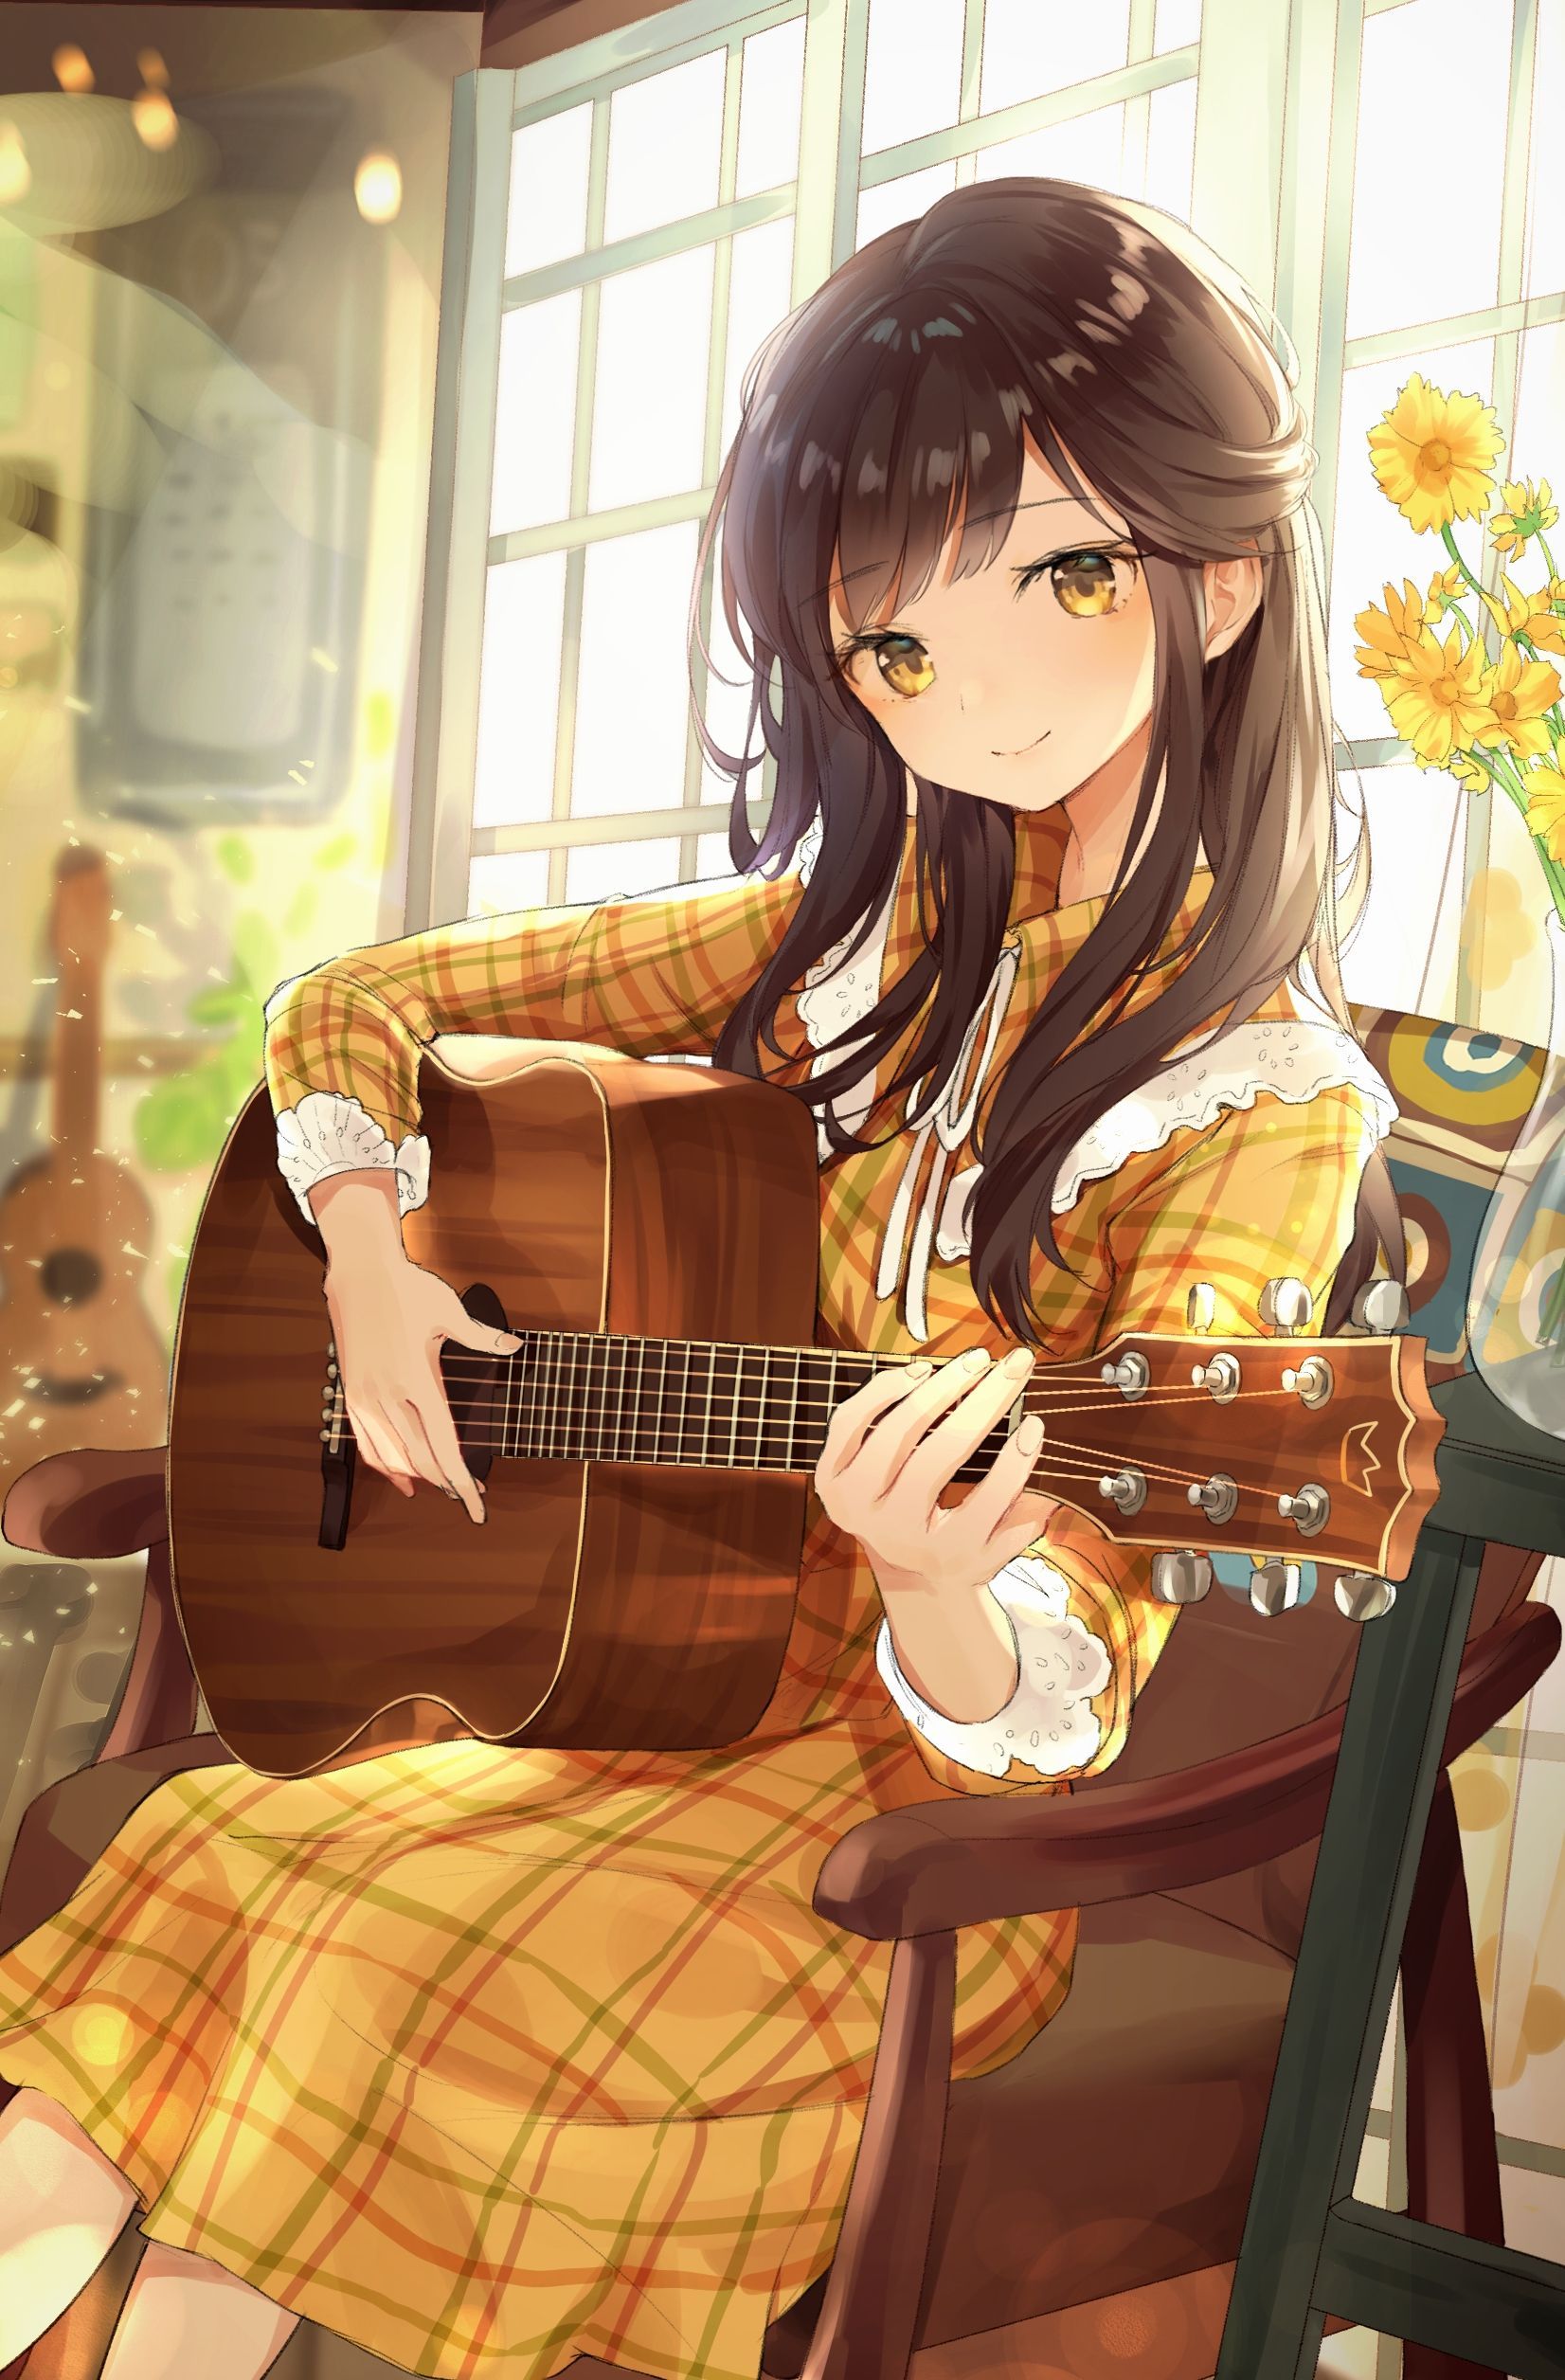 Kawaii Cute Anime Girl With Long Brown Hair Anime Wallpaper Hd